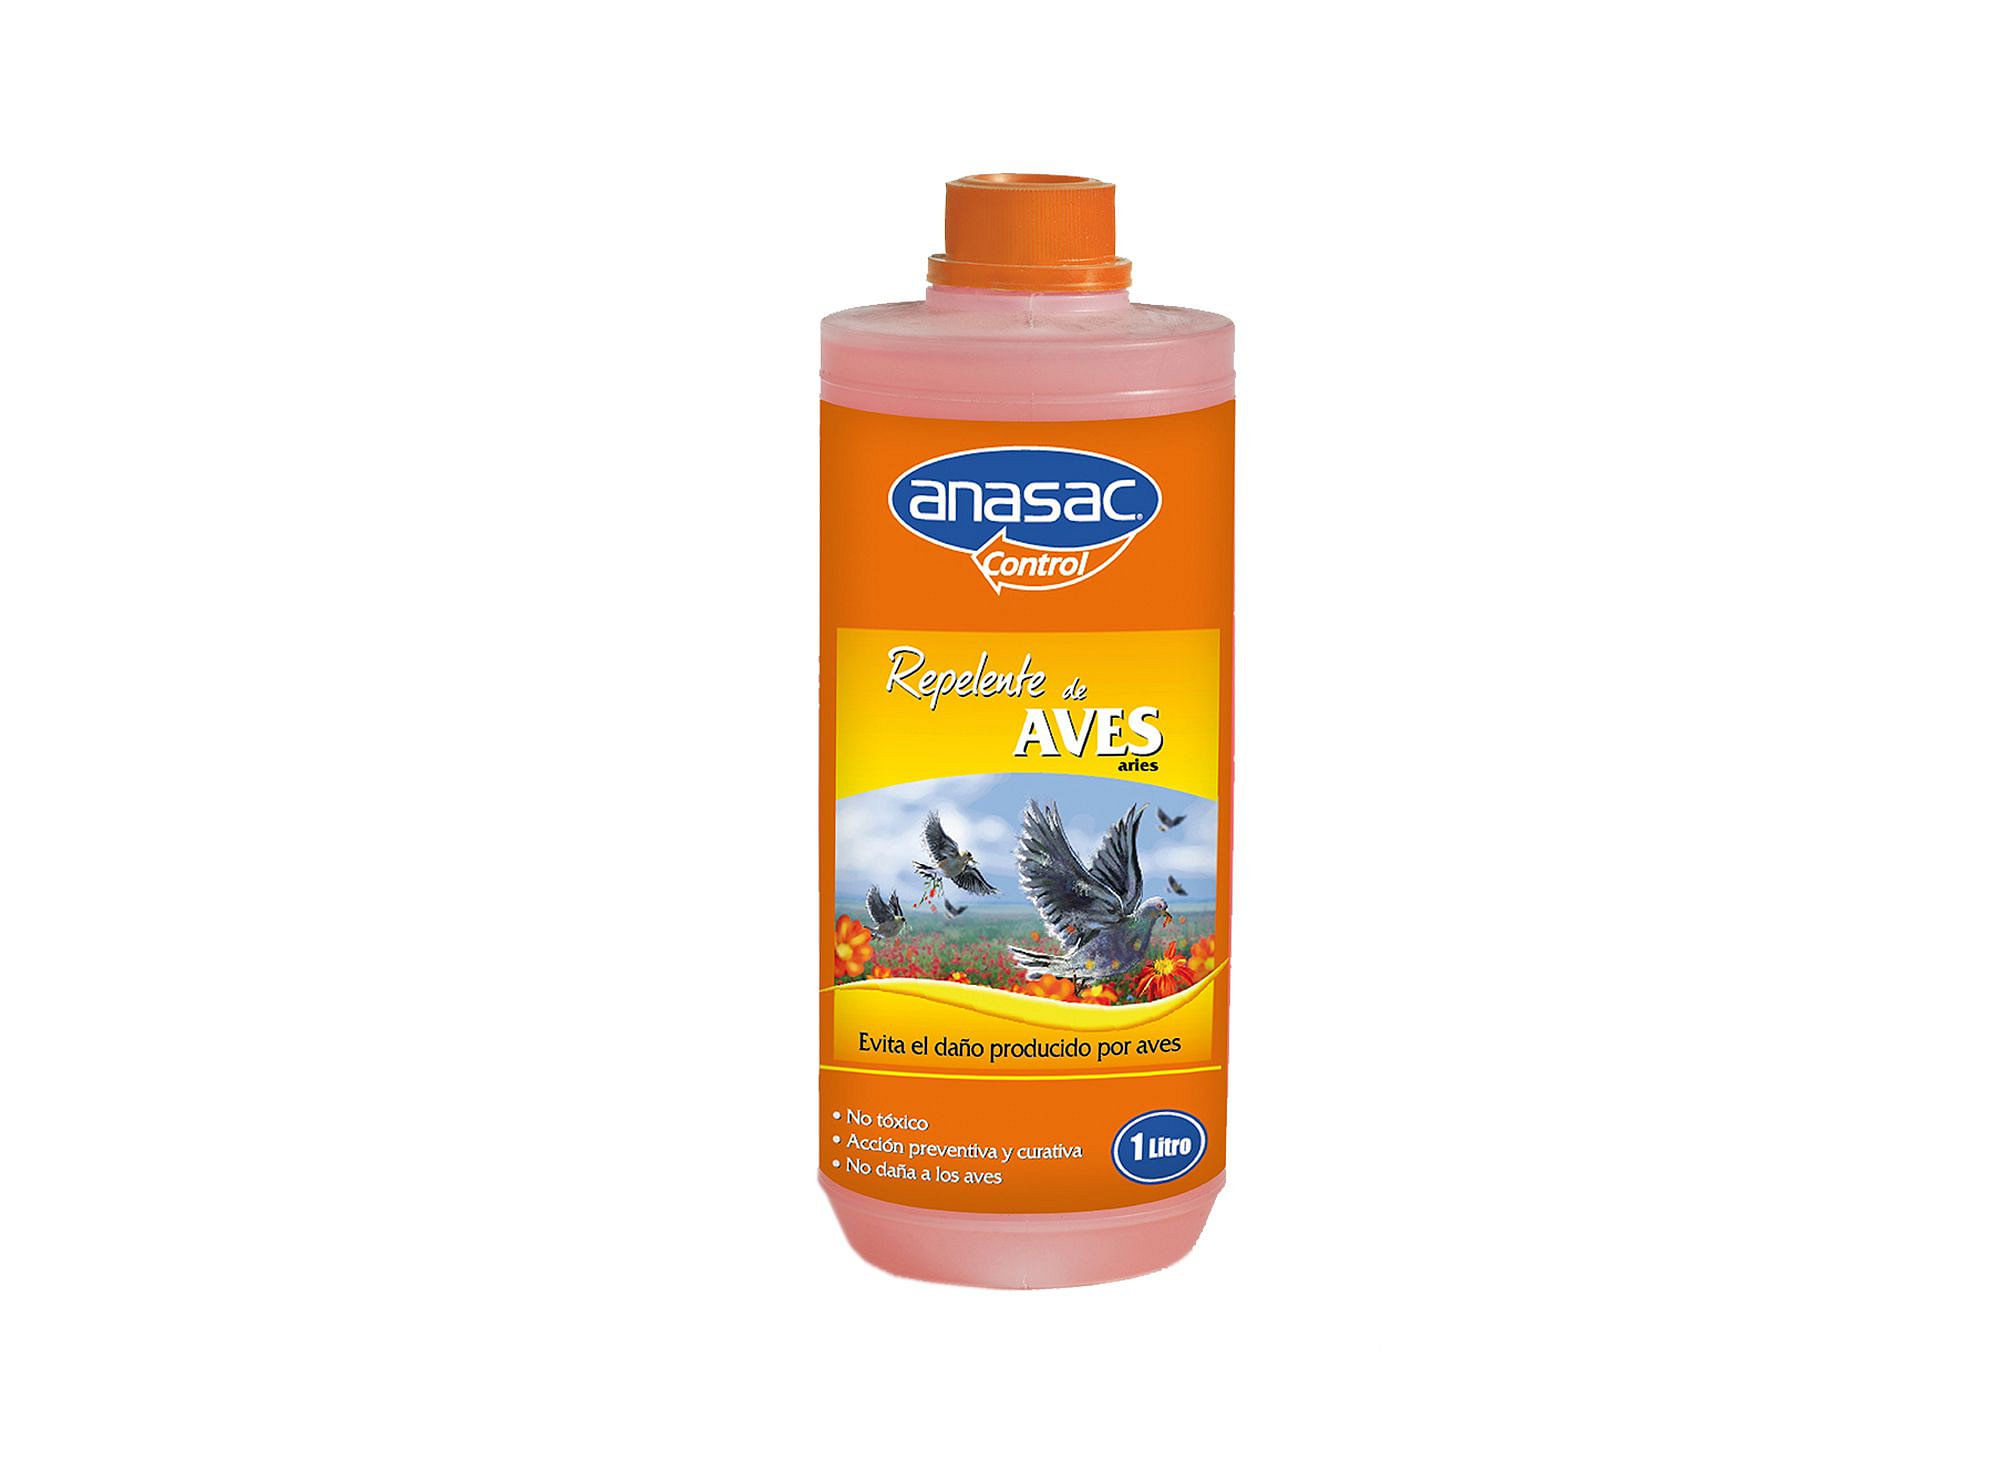 Repelente aves 1 litro Anasac